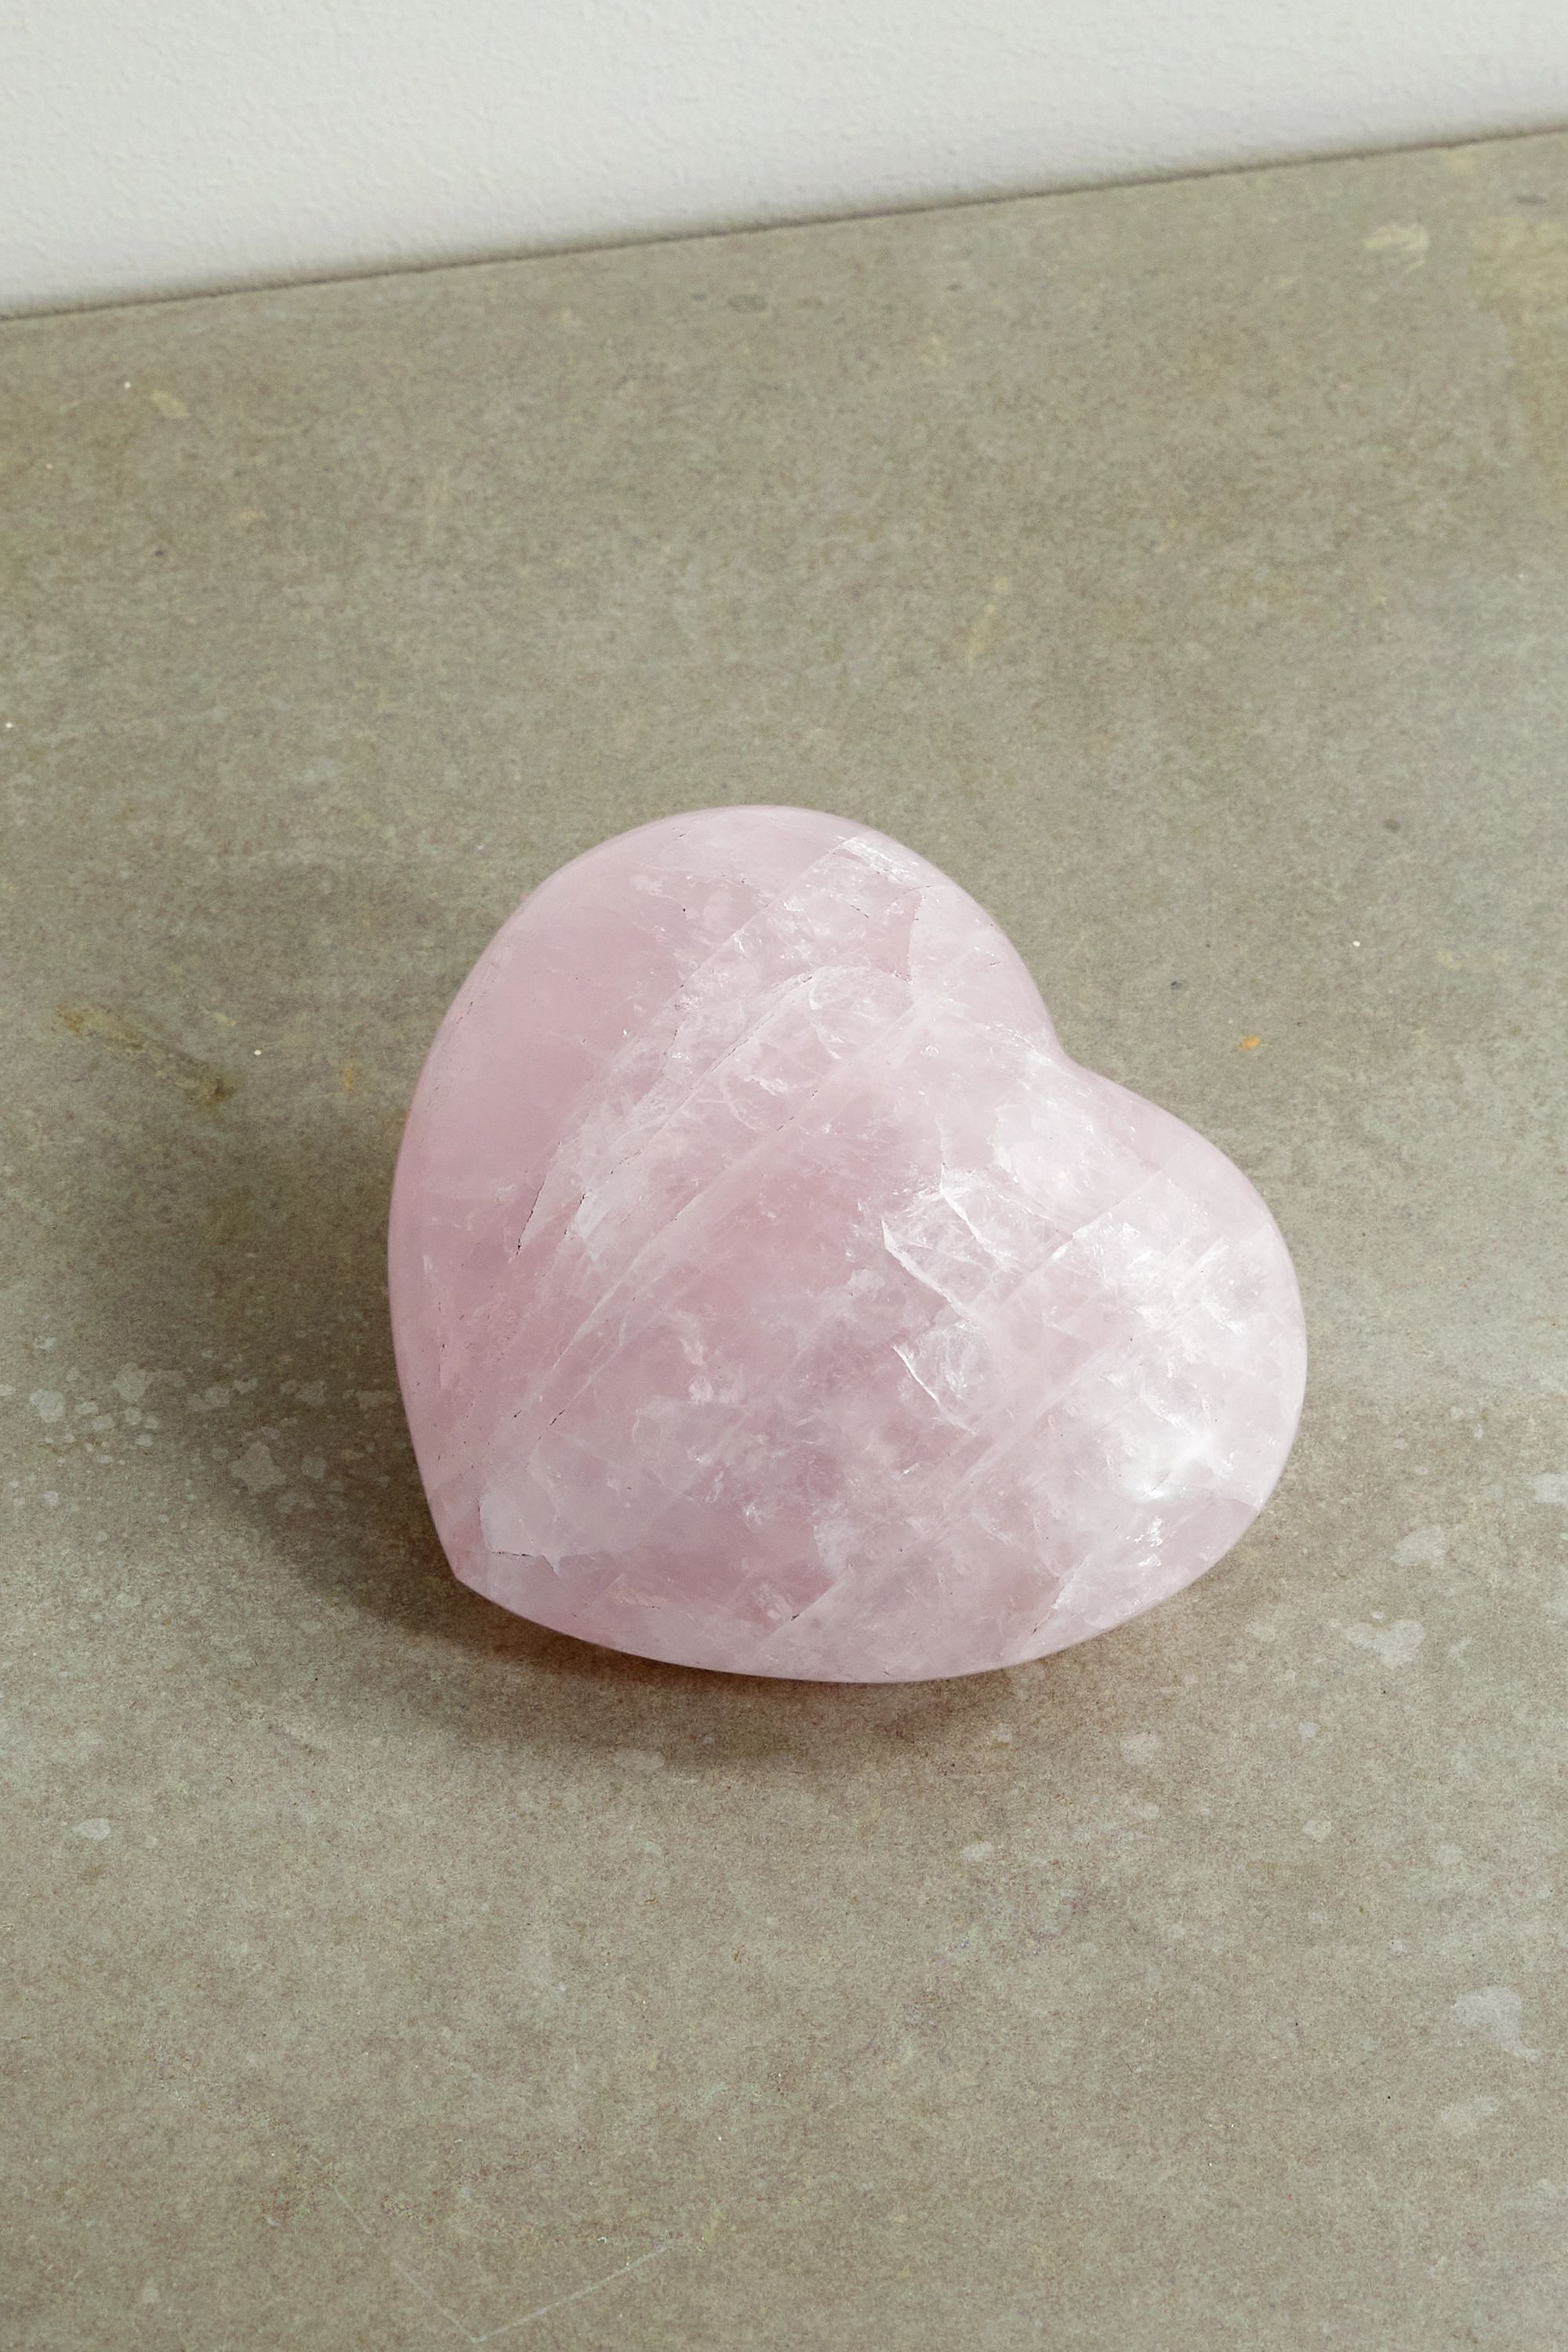 Rose Quartz Stone healing crystals and stones Rose Quartz Crystal Rose Quartz Rose Quartz tumbled stones heart chakra crystals